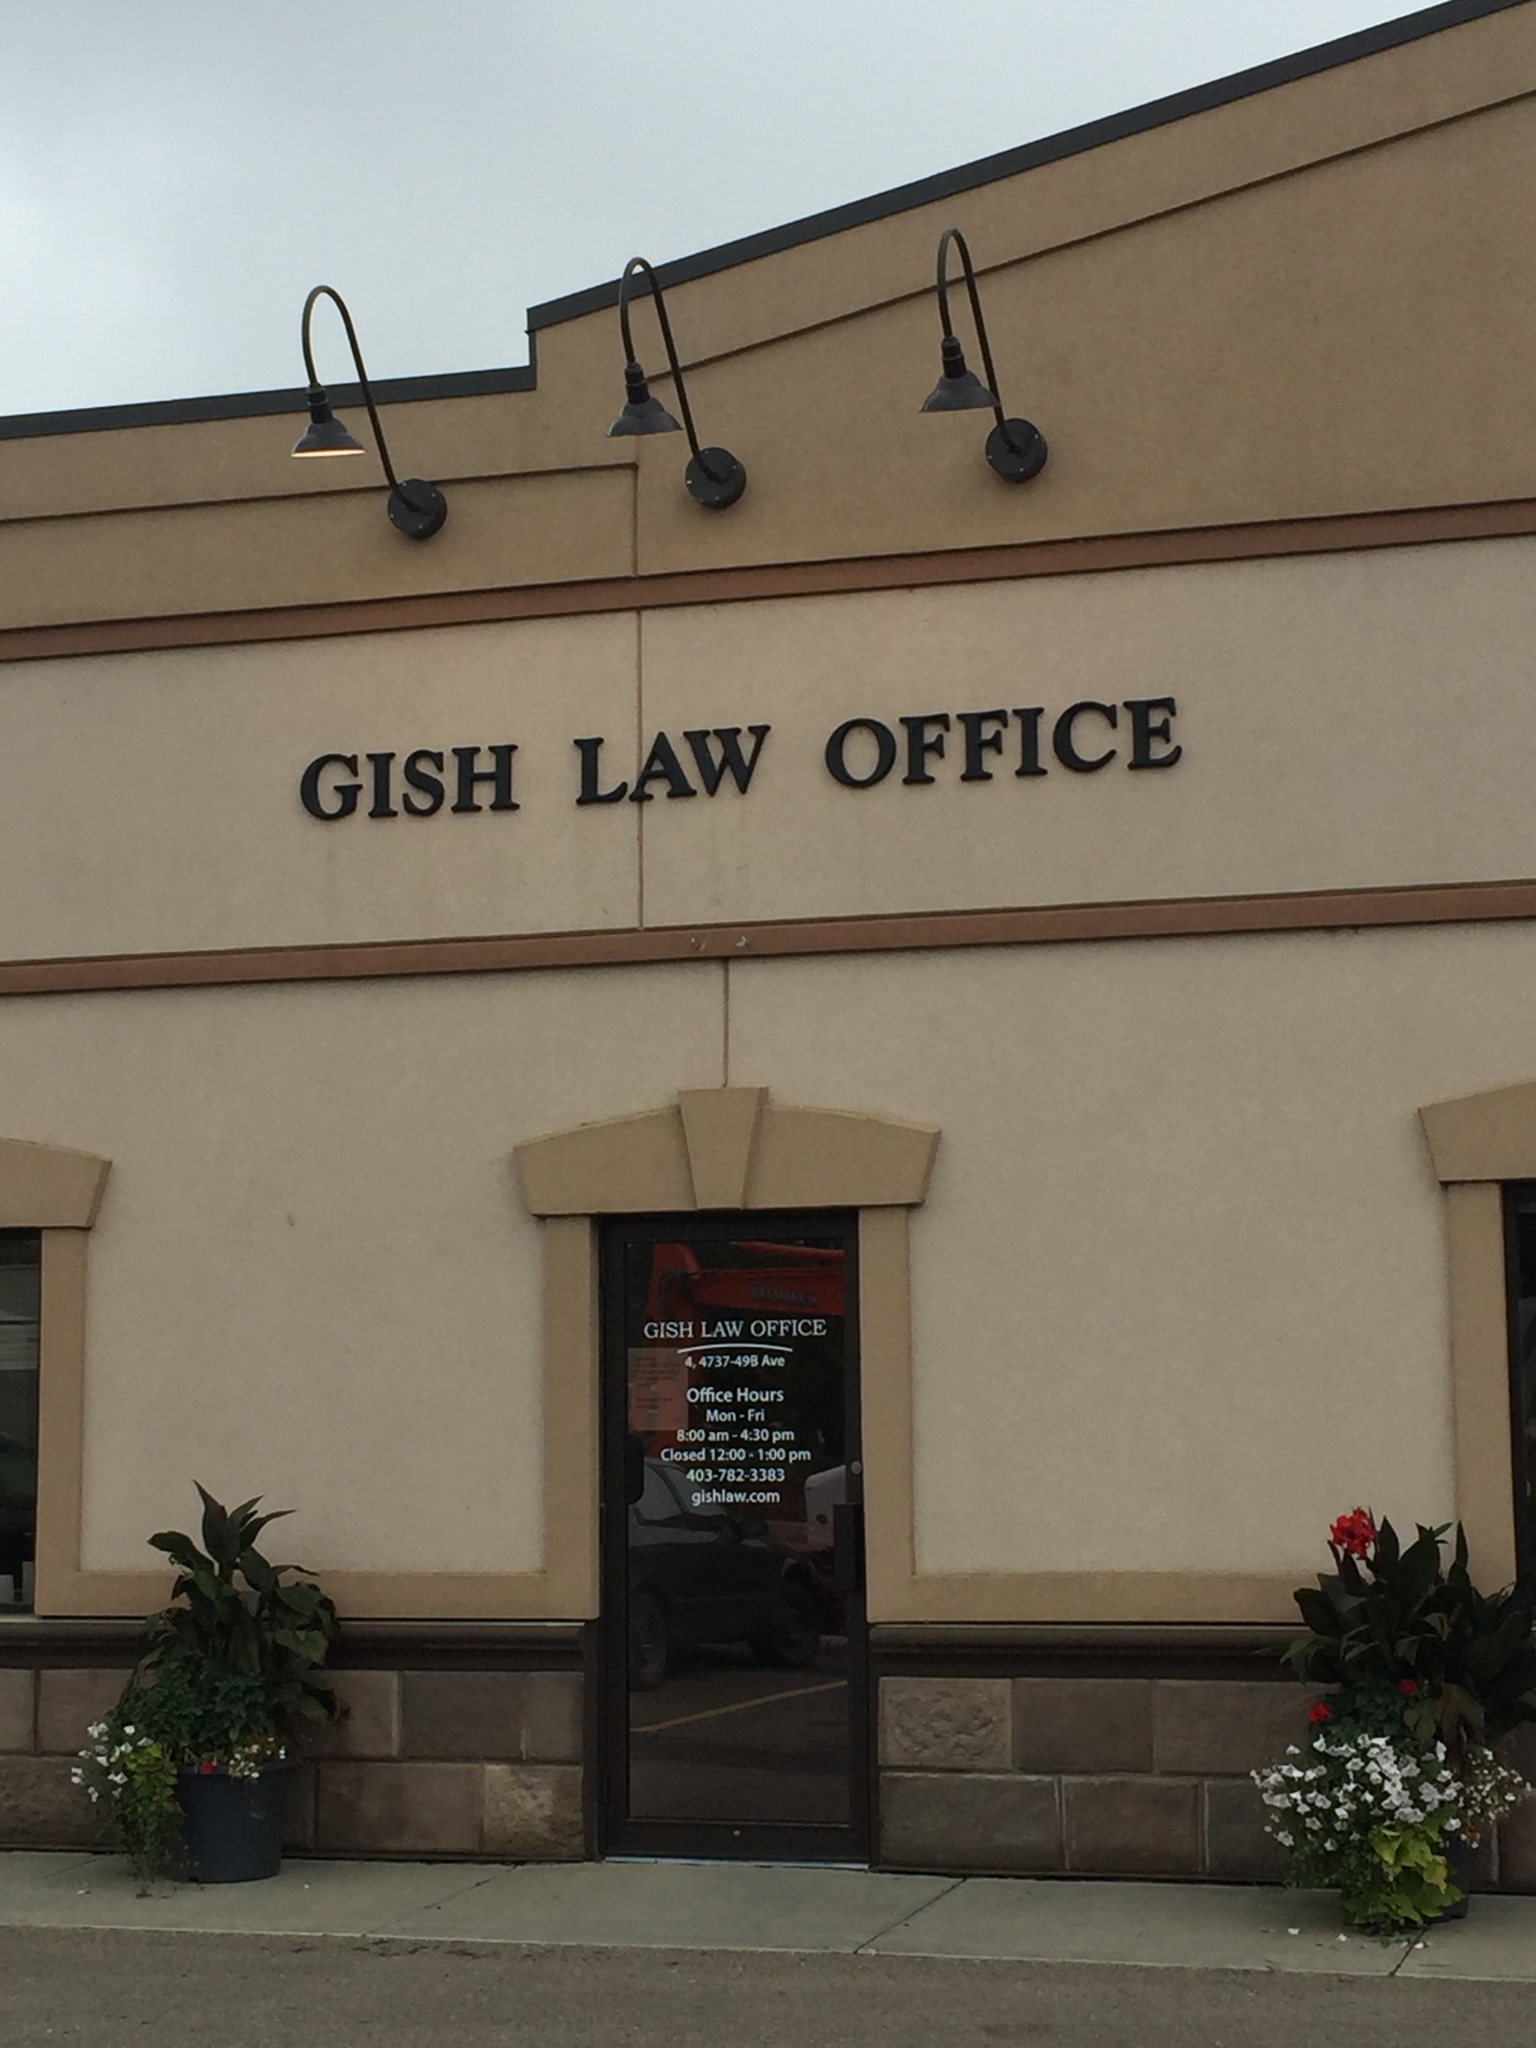 Gish Law Office 4737 49b Ave #4, Lacombe Alberta T4L 1K1